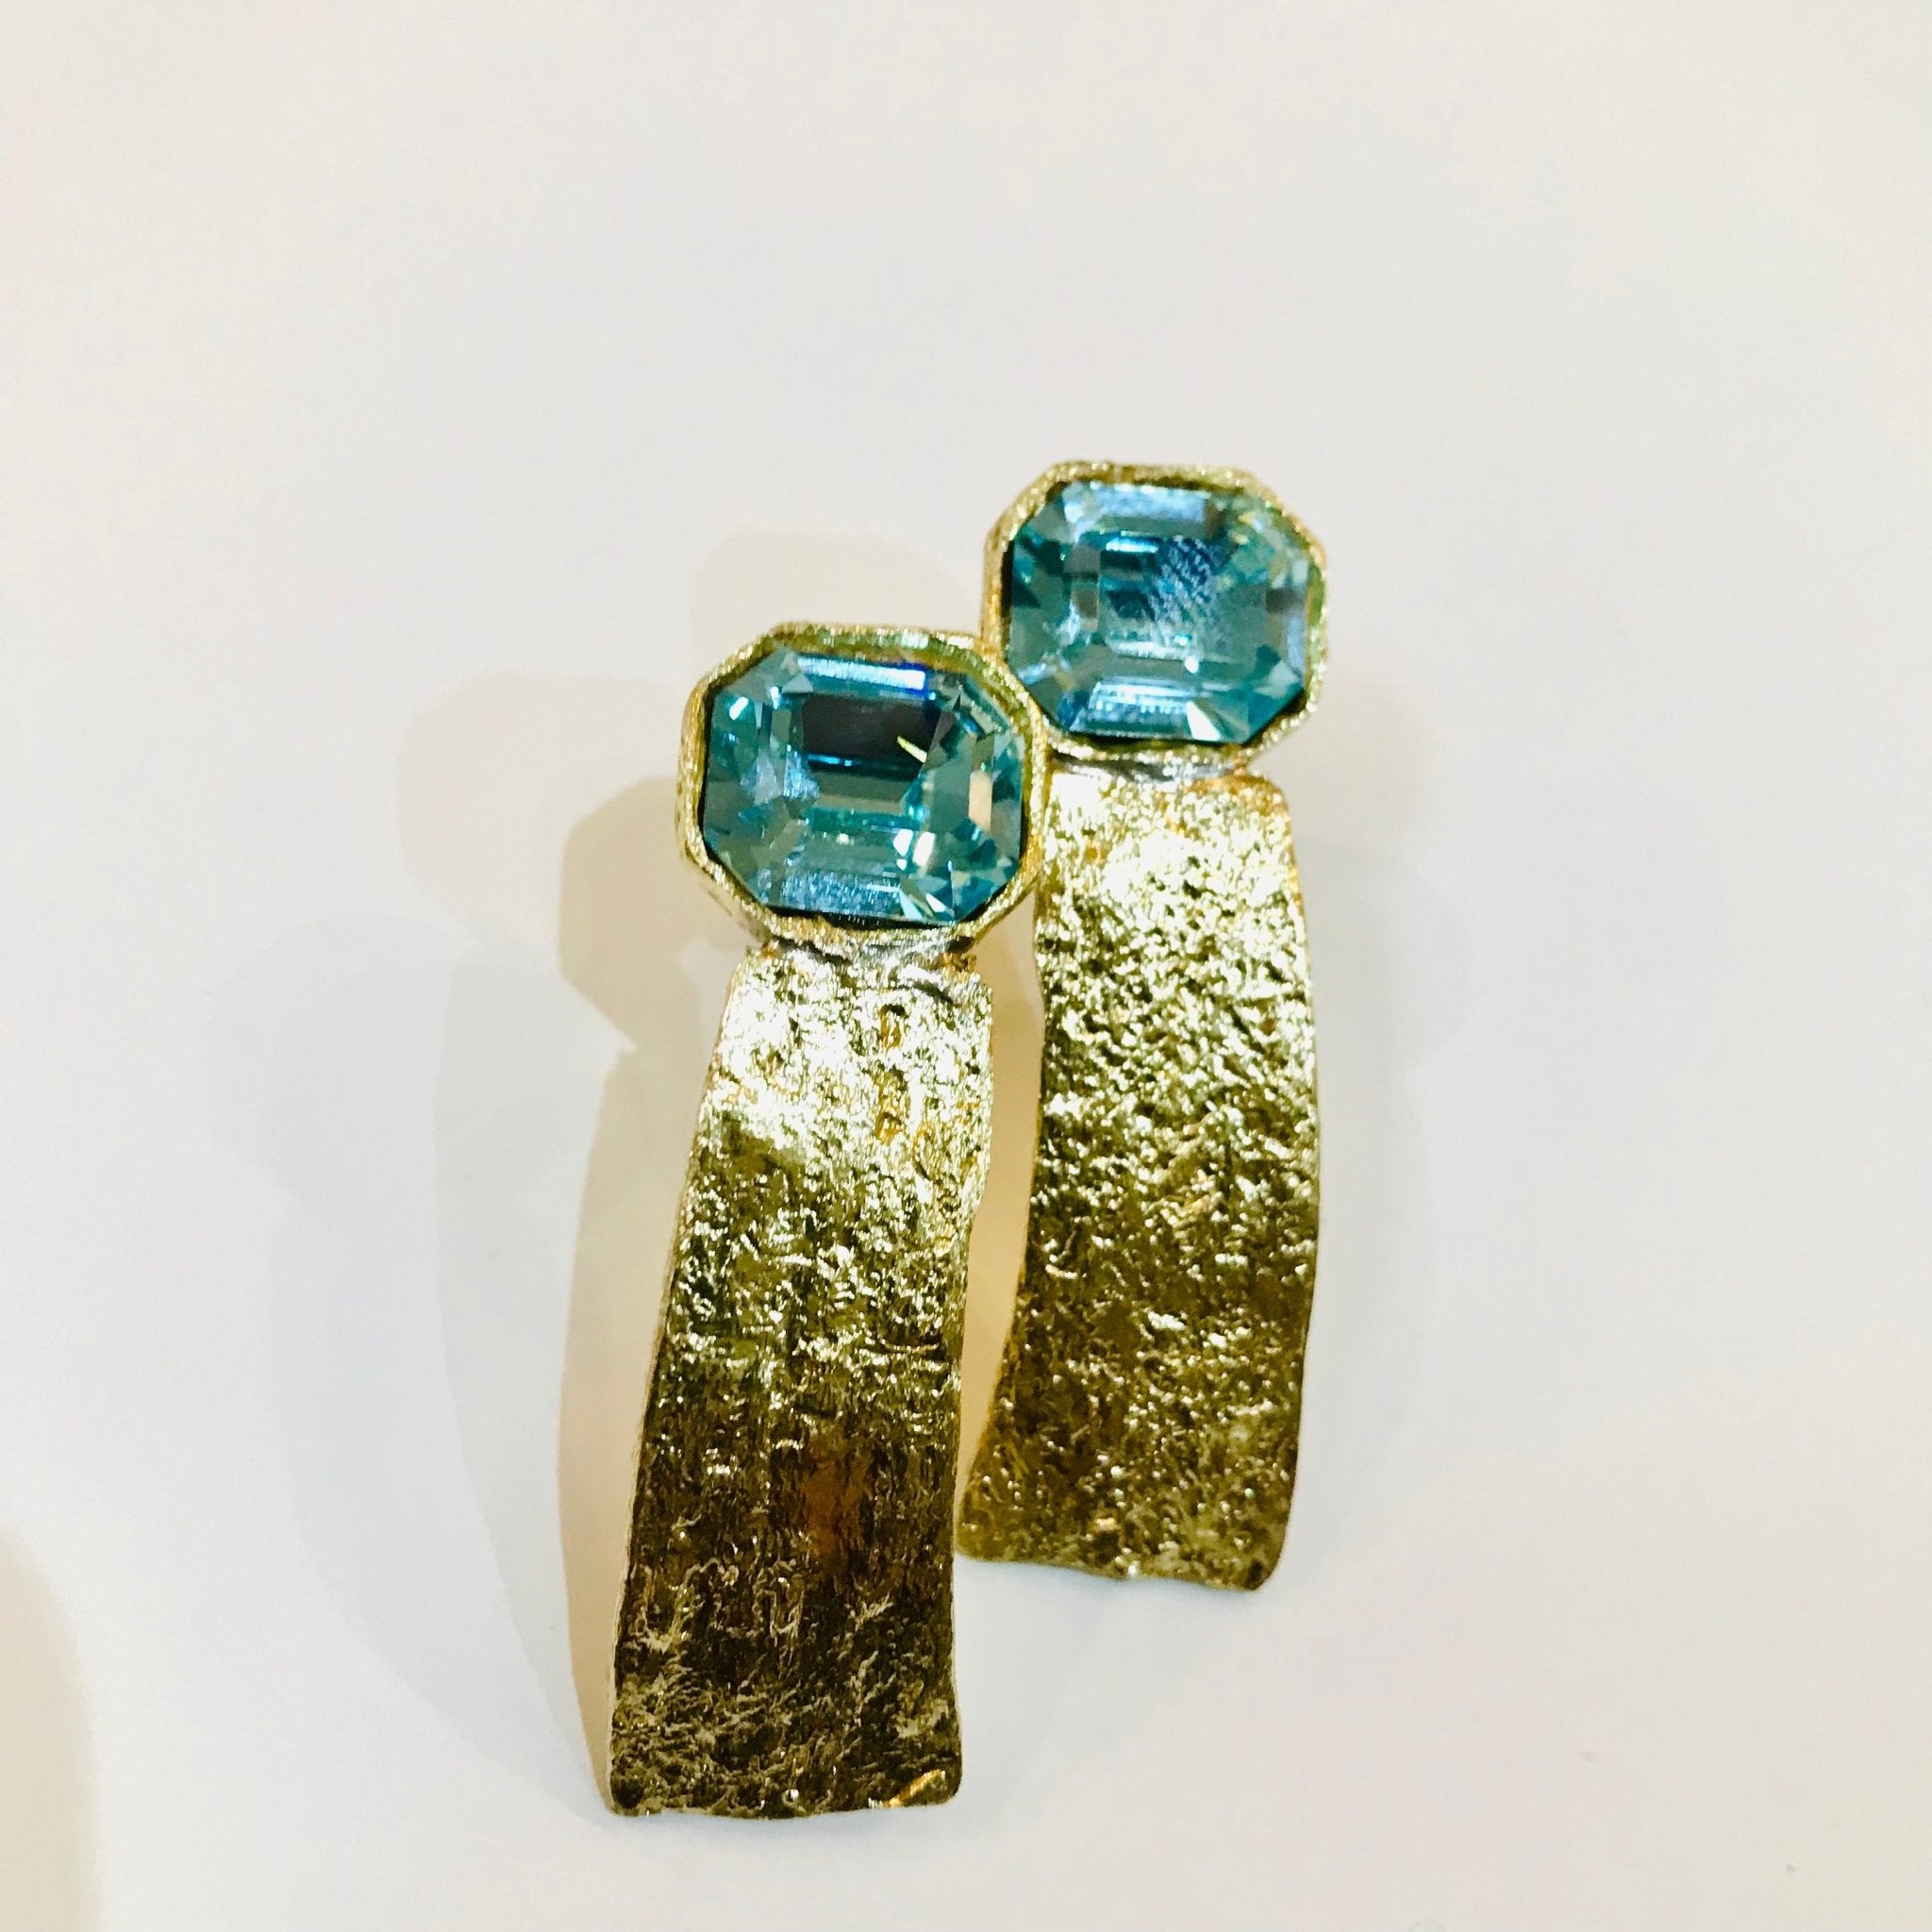 Bronze Aqua Crystal Earrings - The Nancy Smillie Shop - Art, Jewellery & Designer Gifts Glasgow